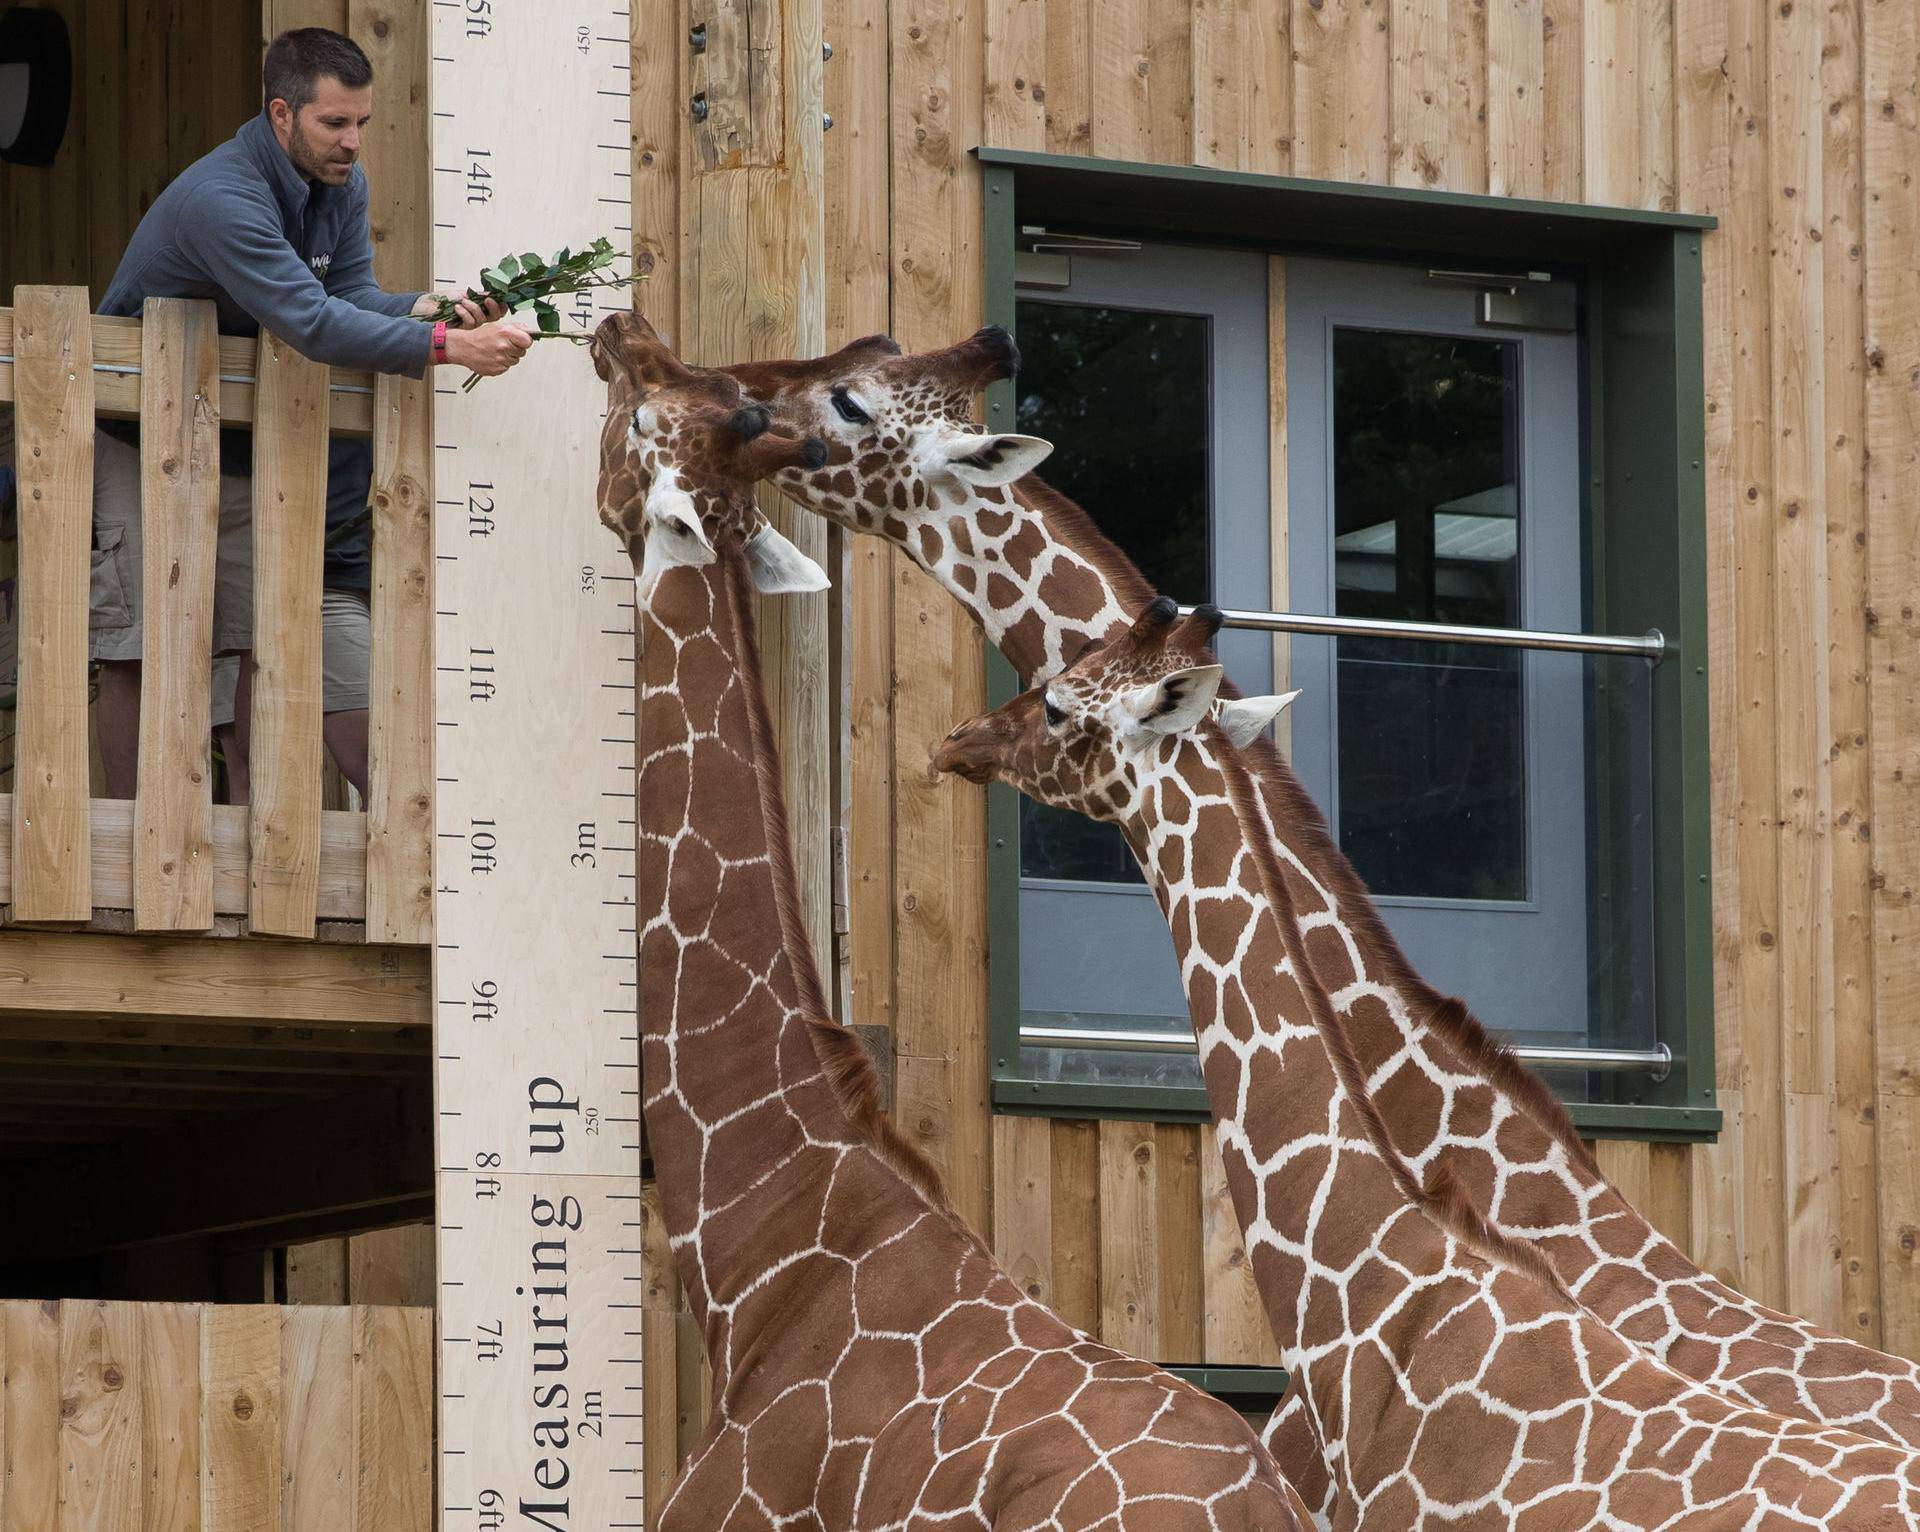 Giraffe measuring